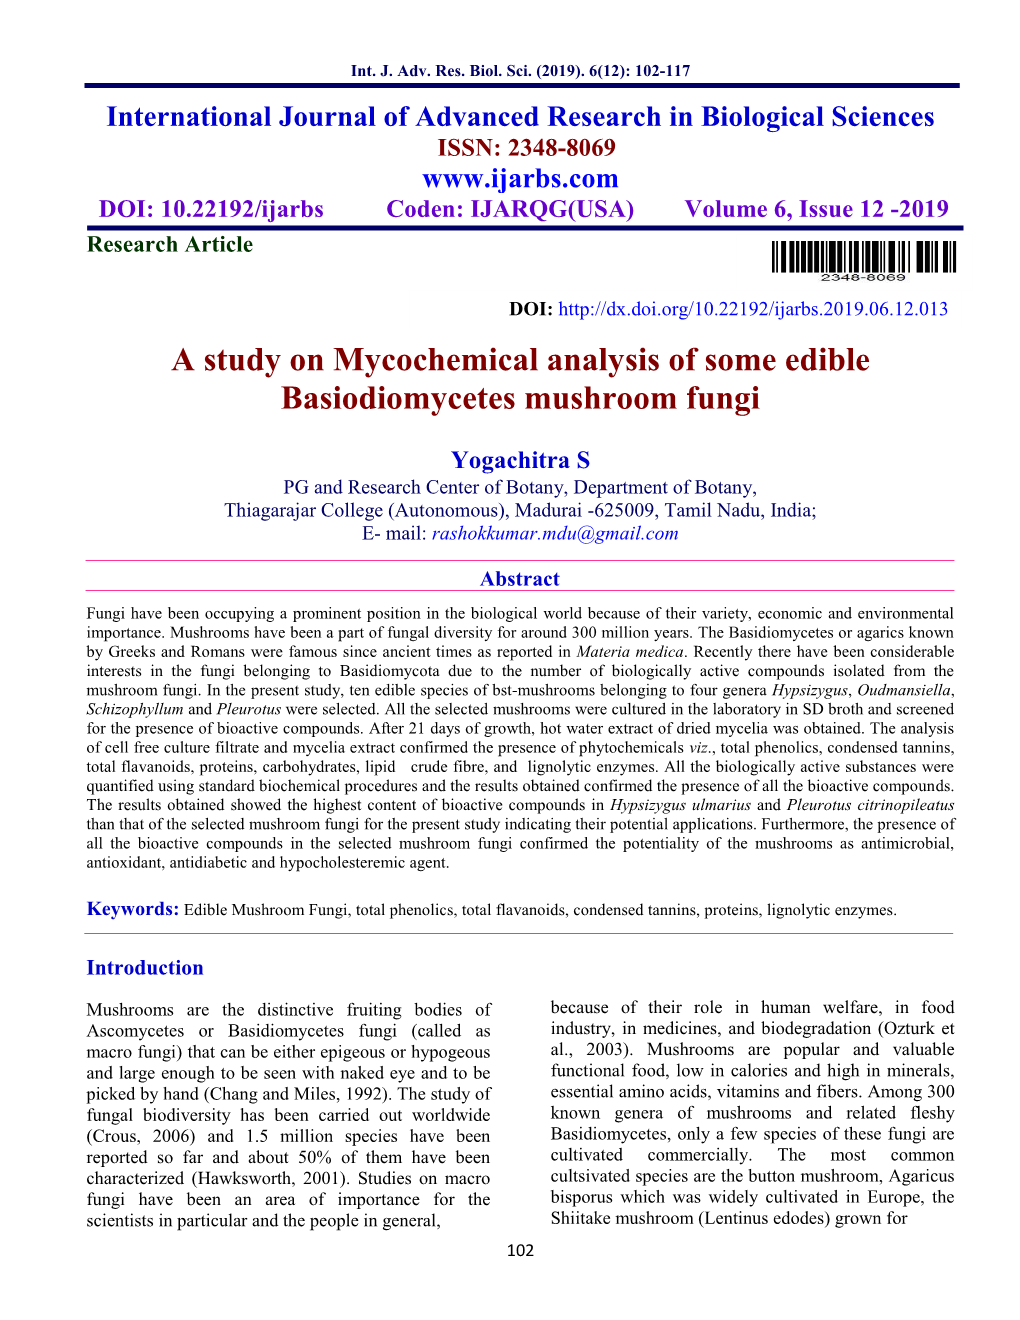 A Study on Mycochemical Analysis of Some Edible Basiodiomycetes Mushroom Fungi